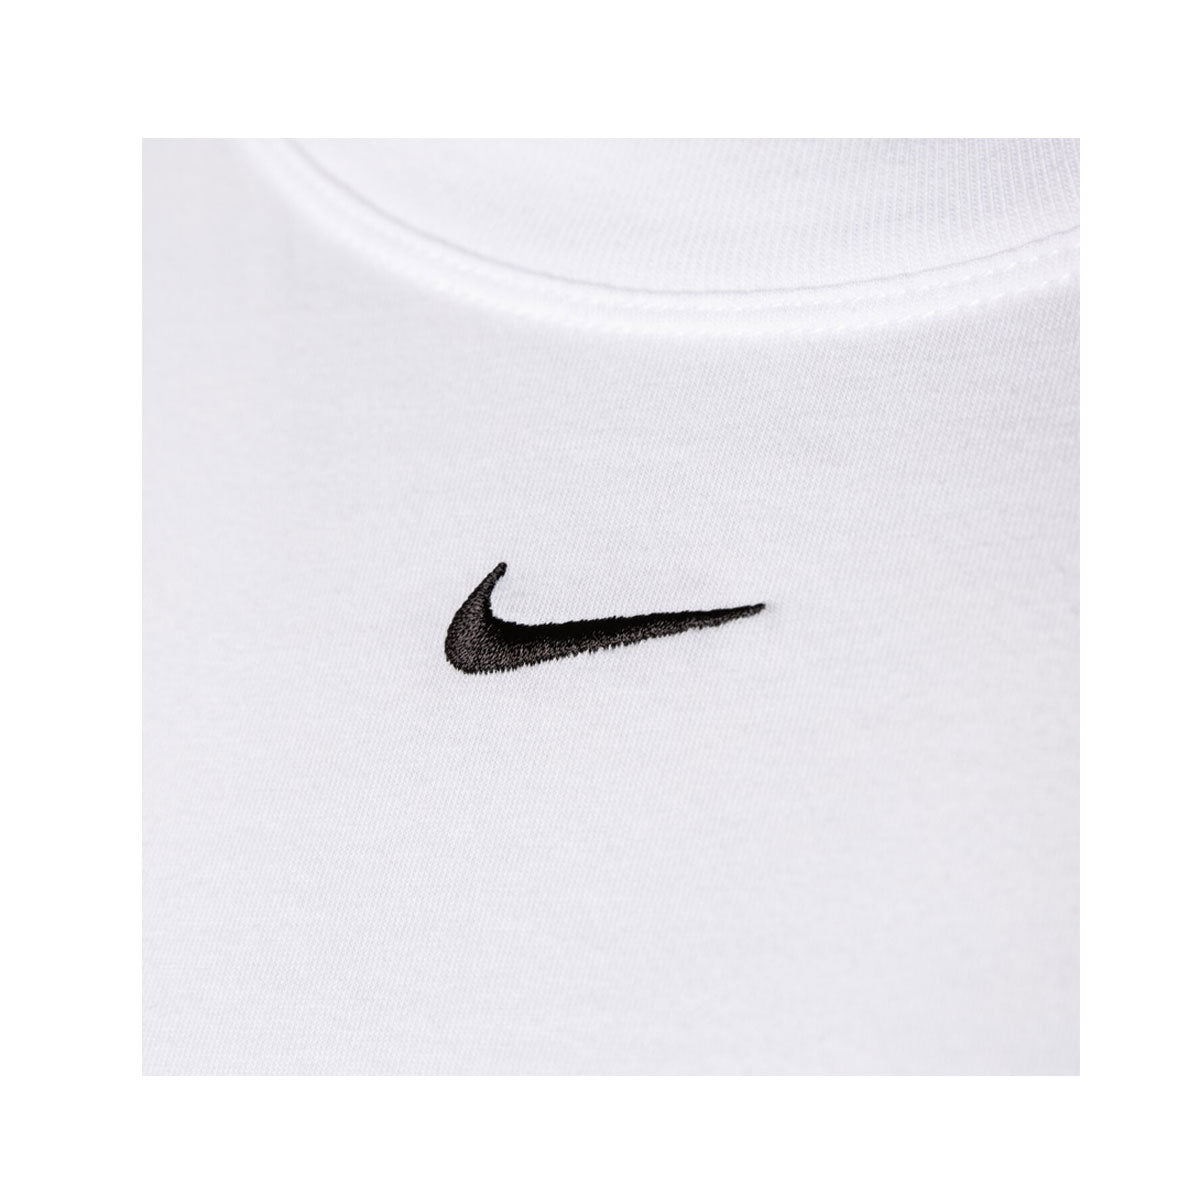 Nike Women's Sportswear Essentials T-Shirt